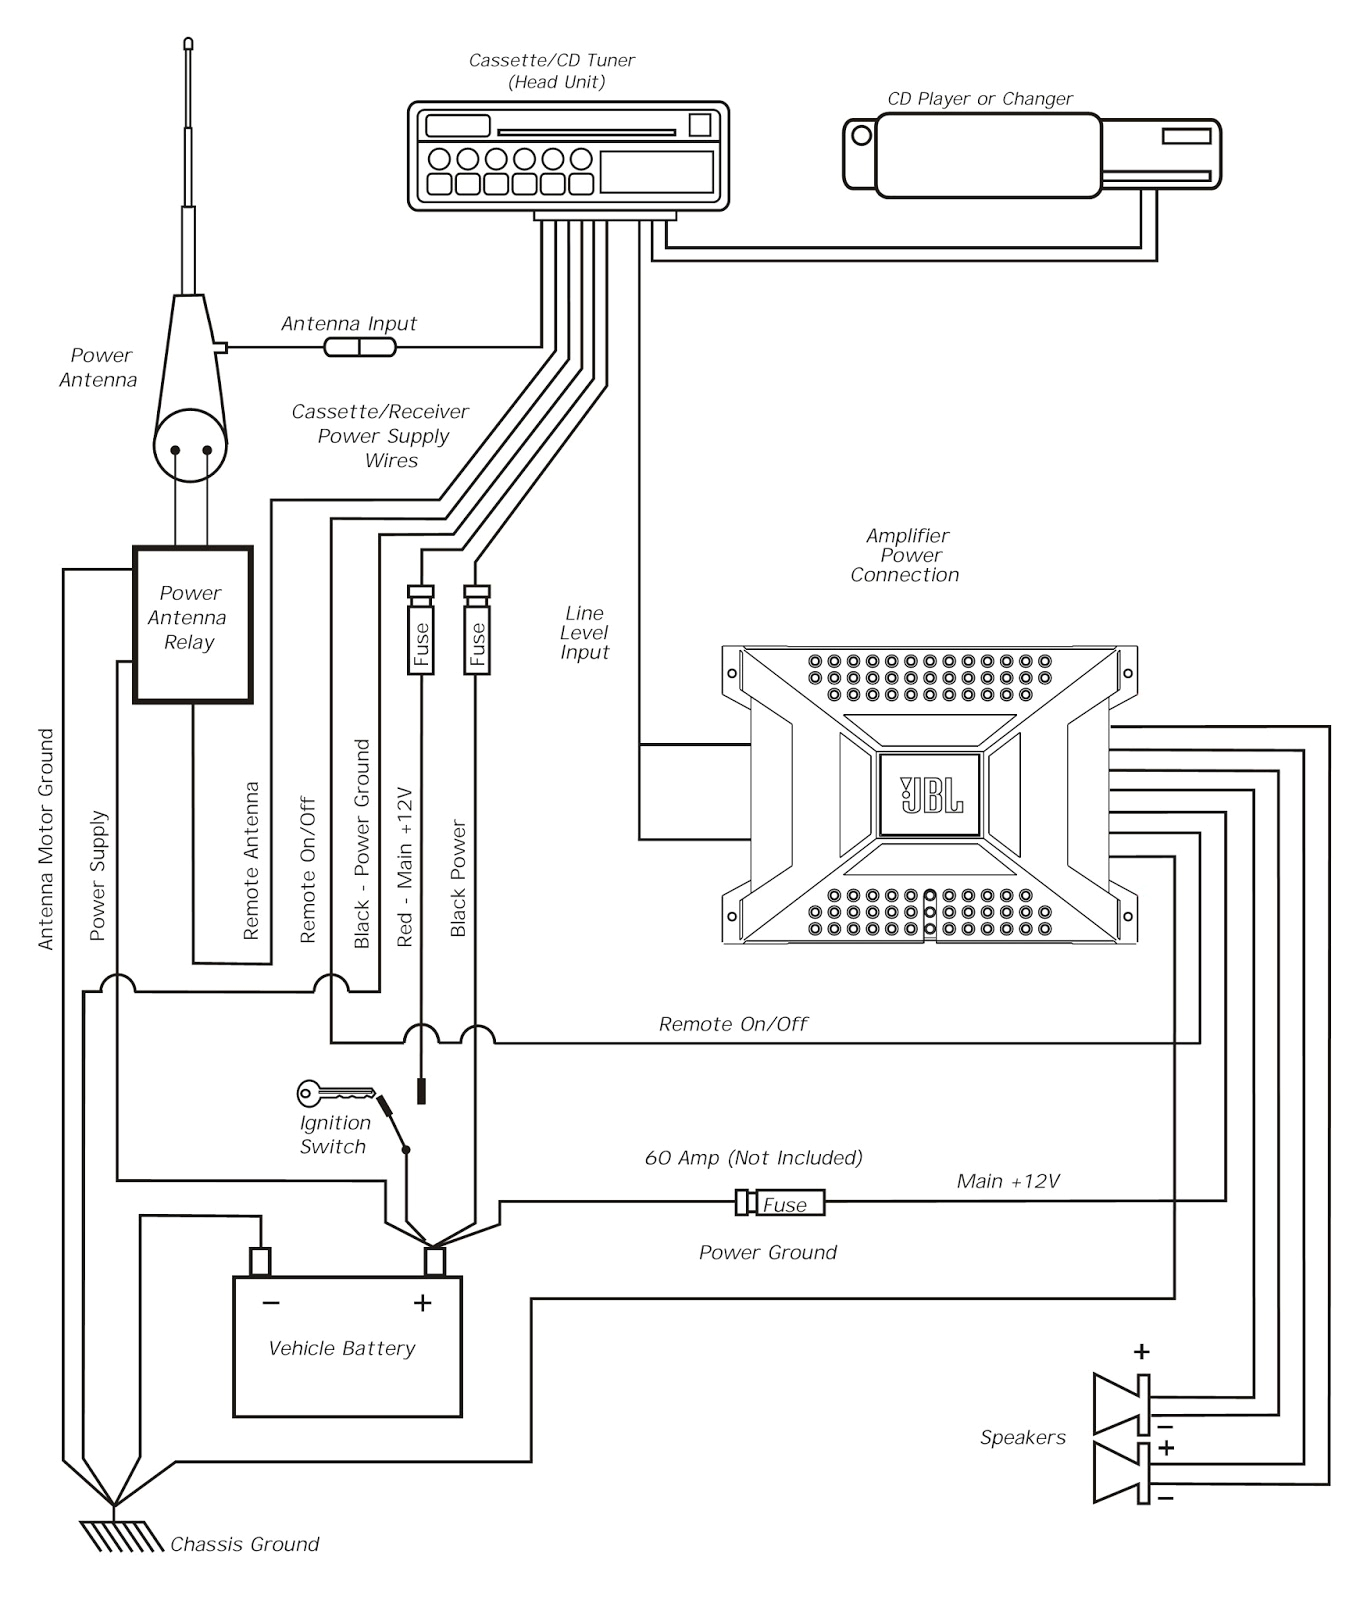 acewell 7659 wiring diagram luxury wiring diagram symbols archives ipphil fresh wiring diagram wiring